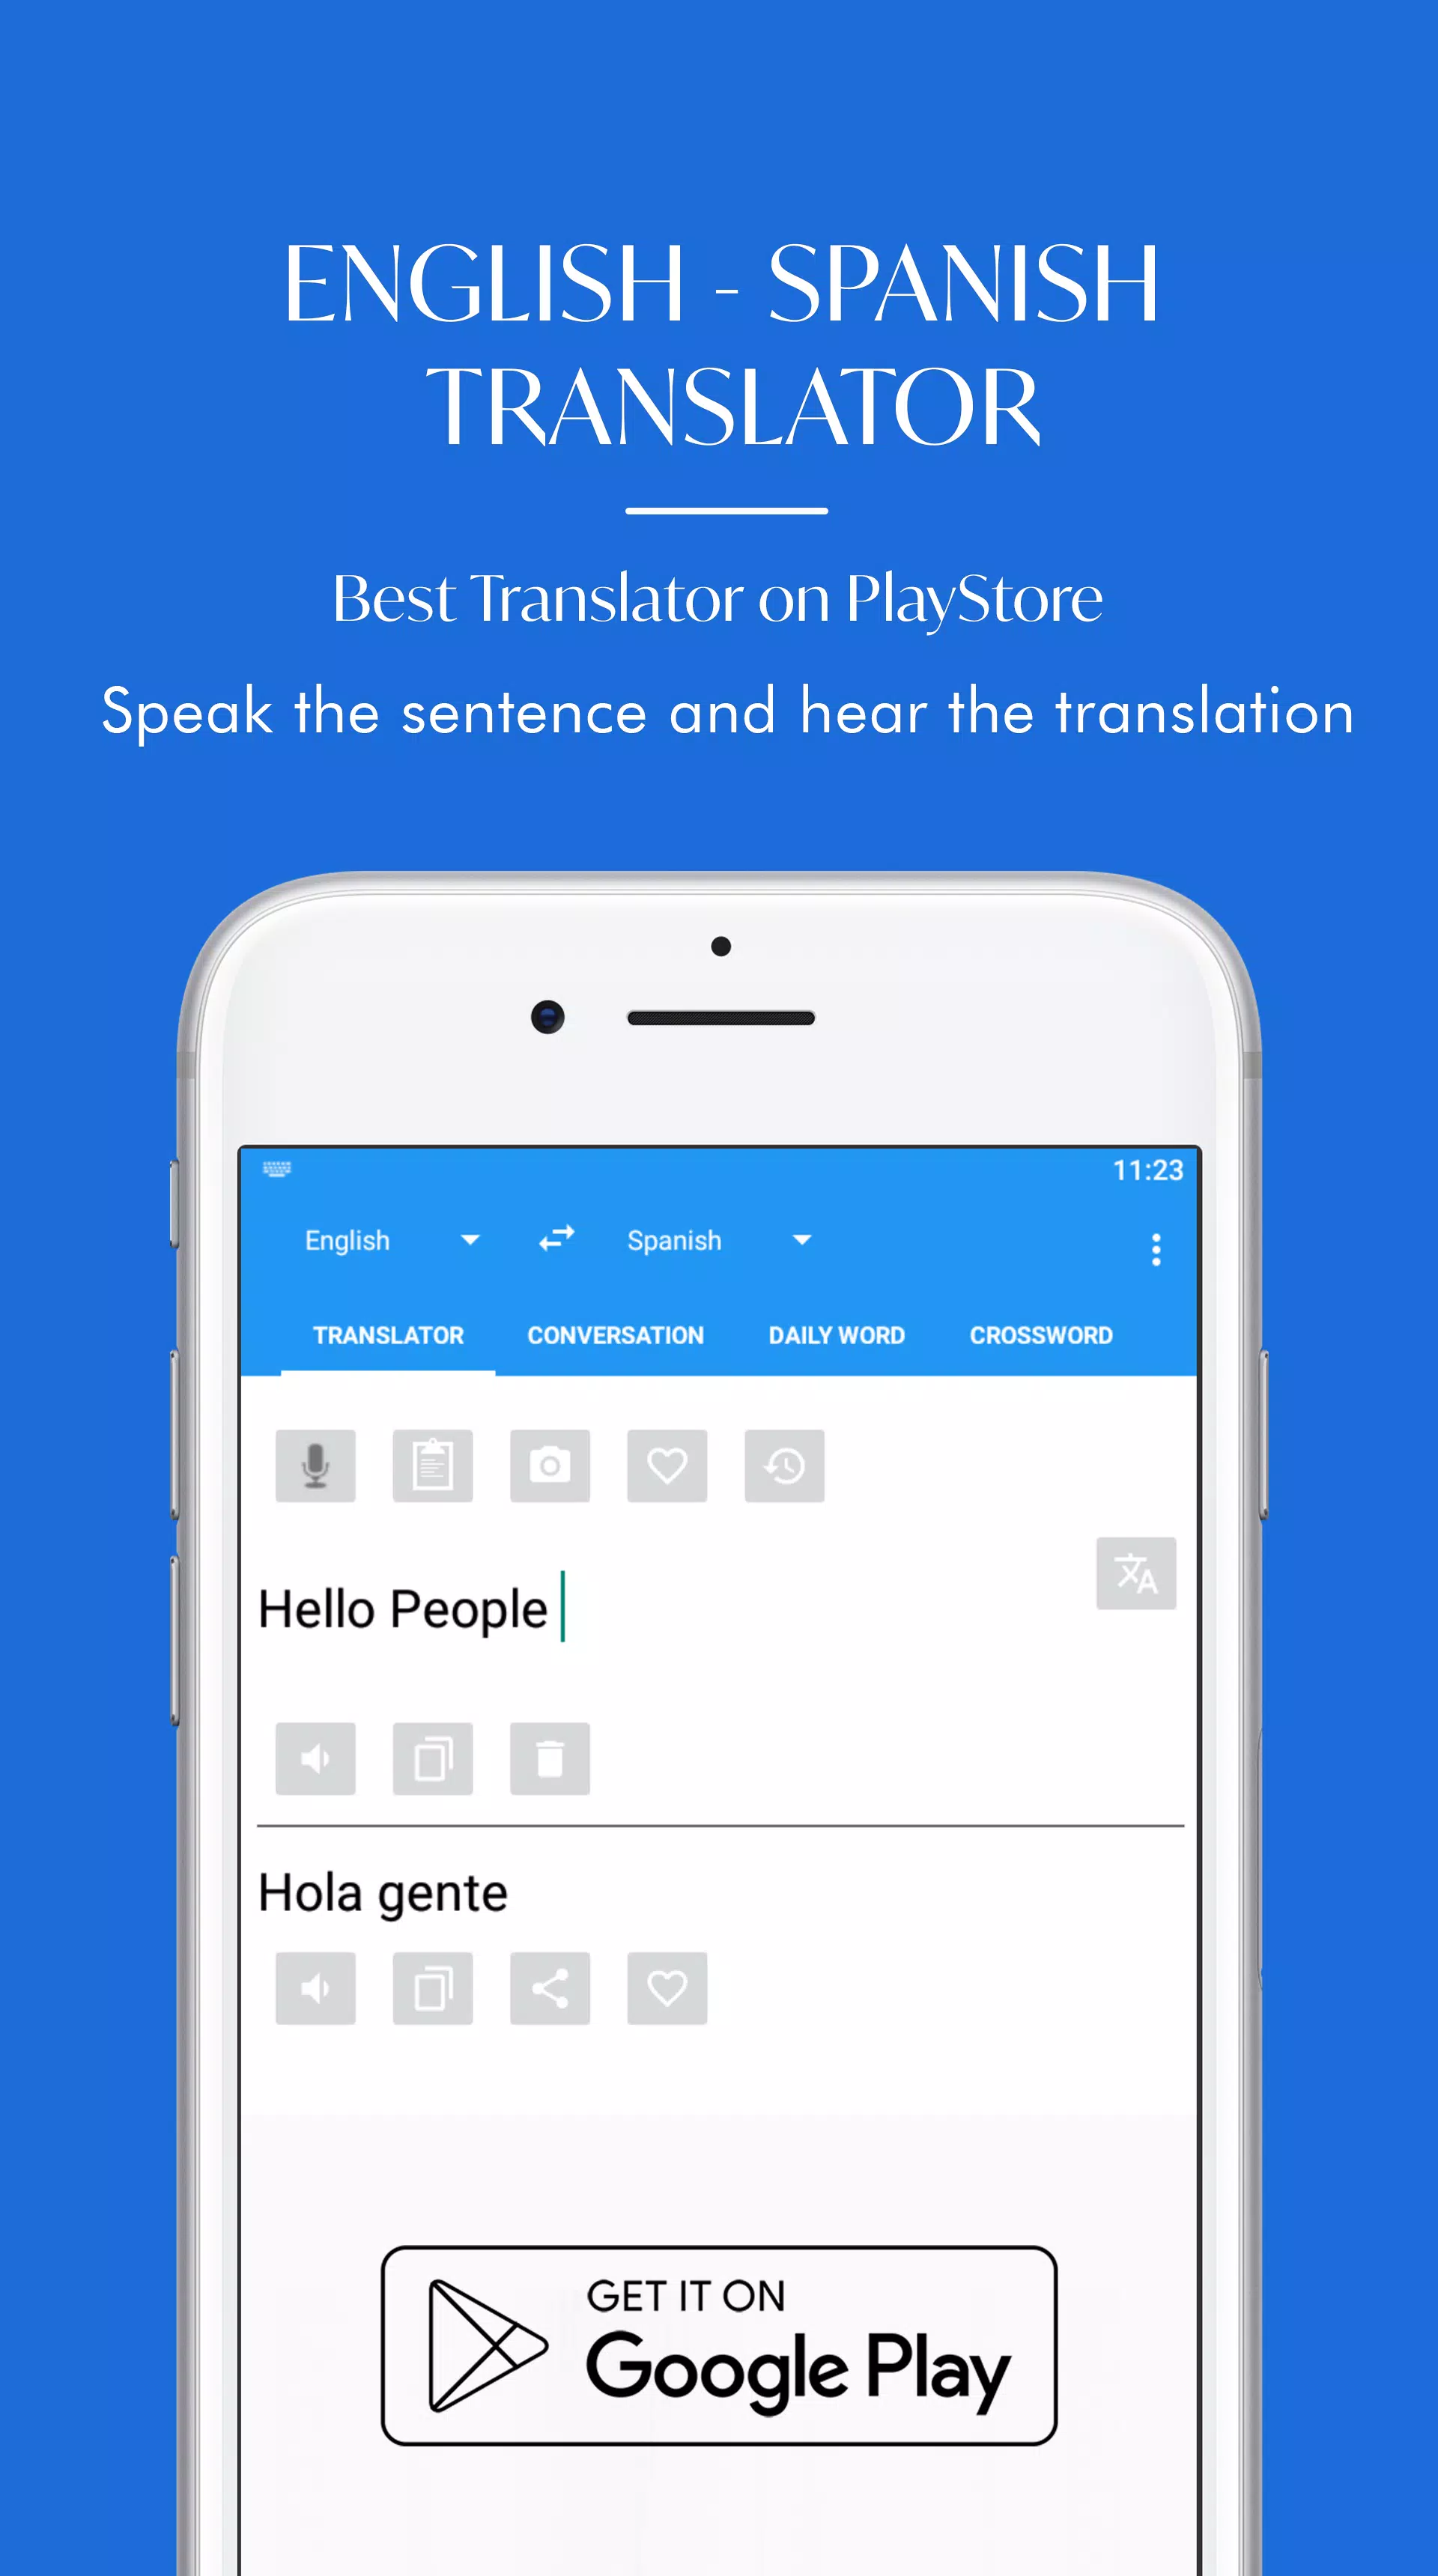 iTranslate Tradutor – Apps no Google Play